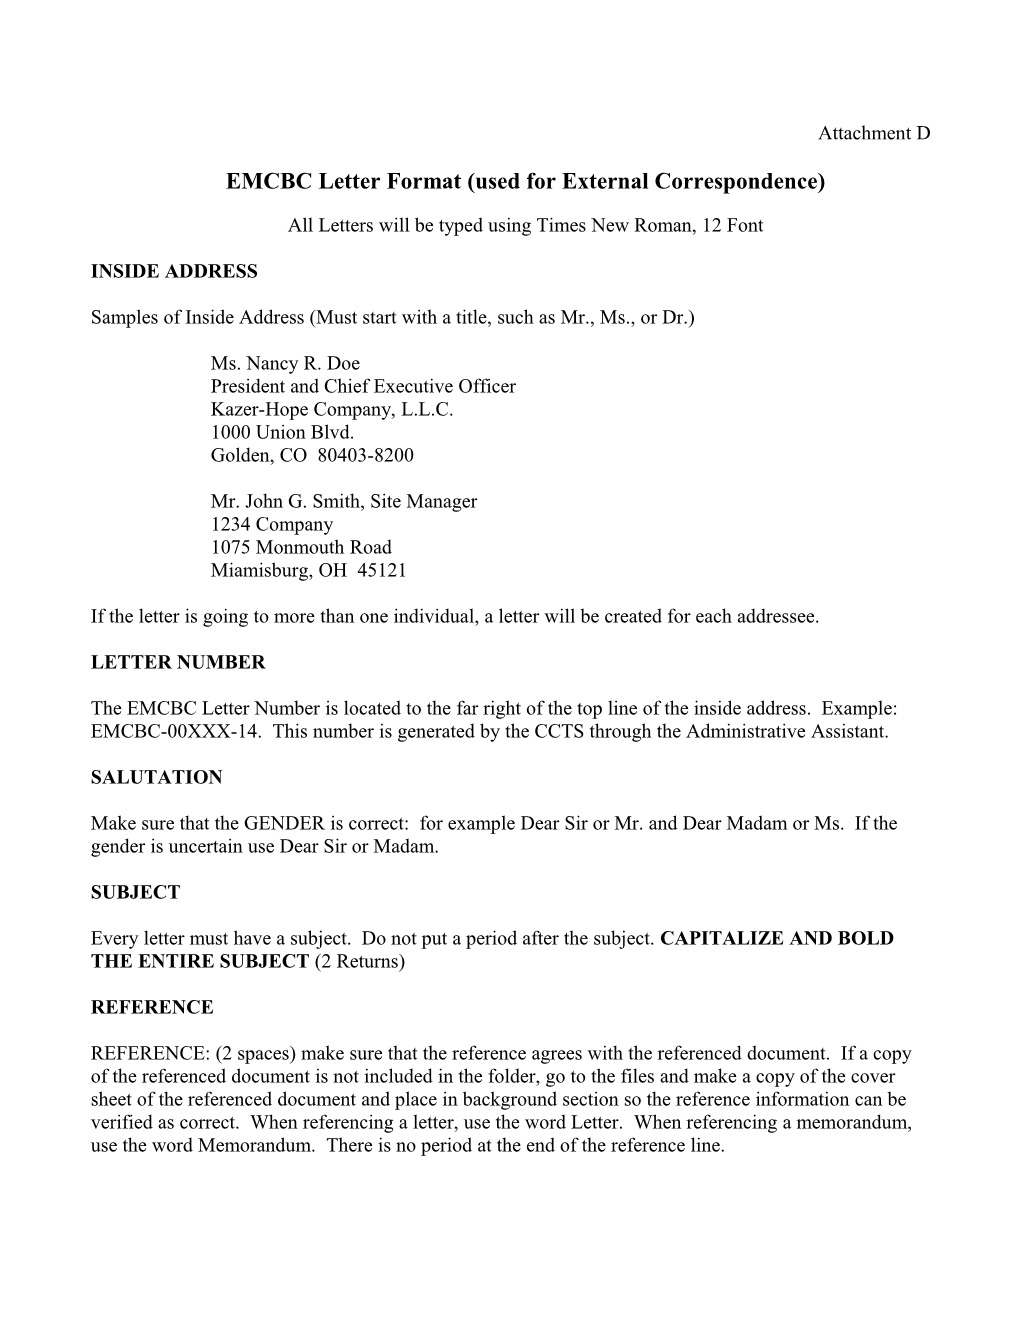 EMCBC Letter Format (Used for External Correspondence)